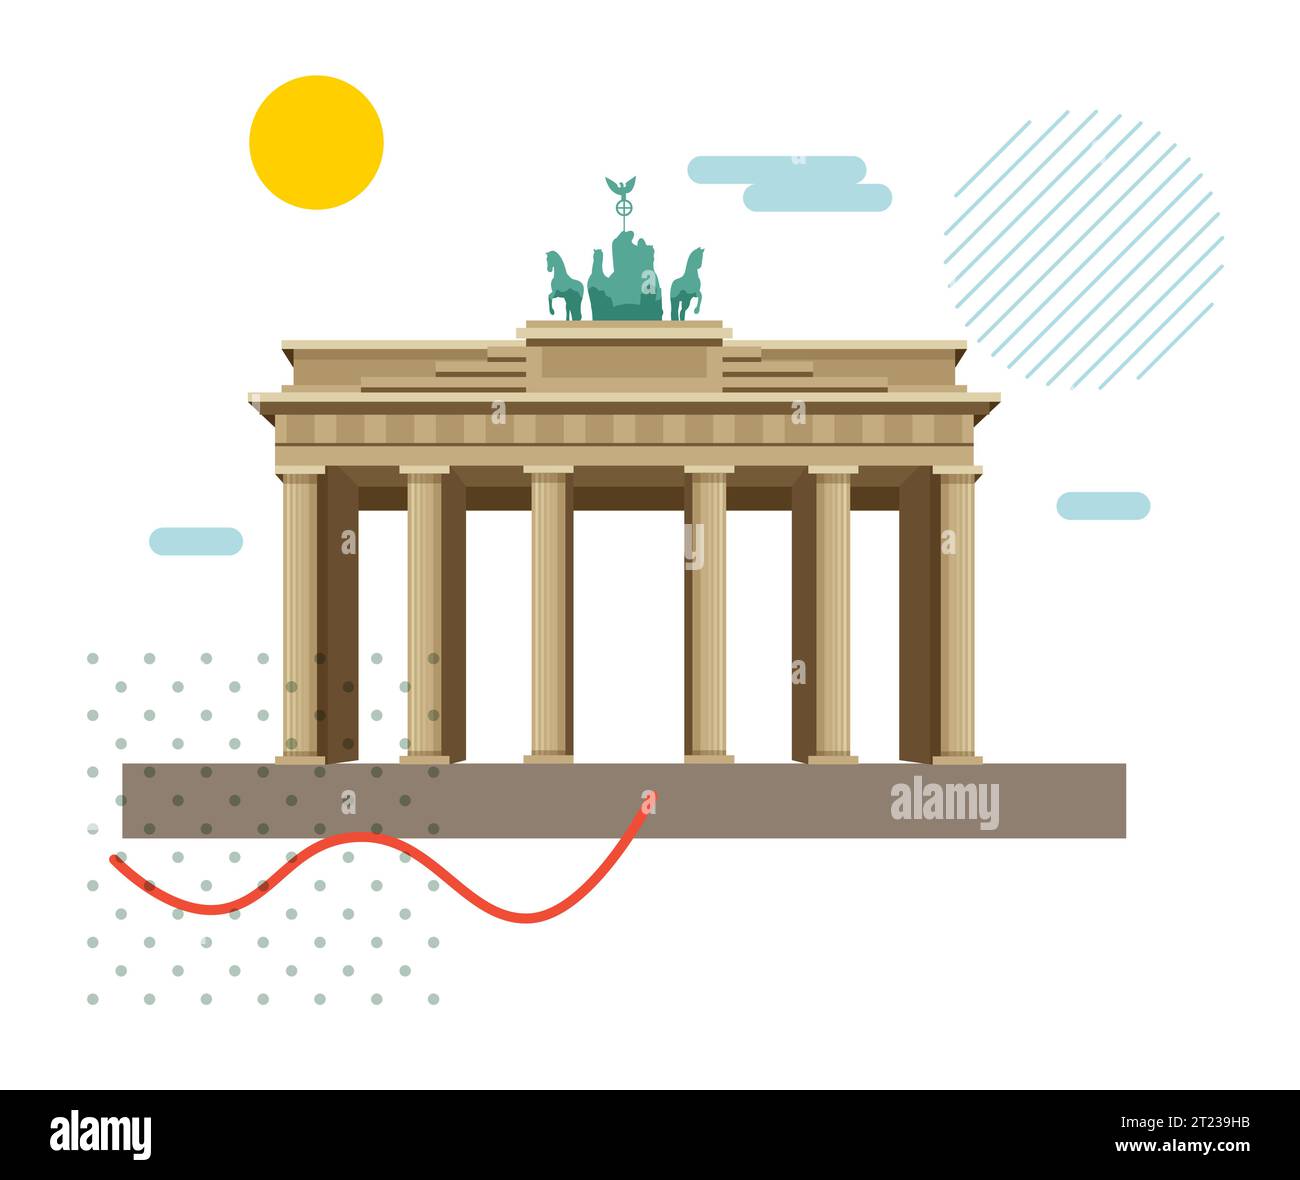 Brandenburger Tor - Pariser Platz , Berlin, Deutschland - Stockbild als EPS 10 Datei Stock Vektor